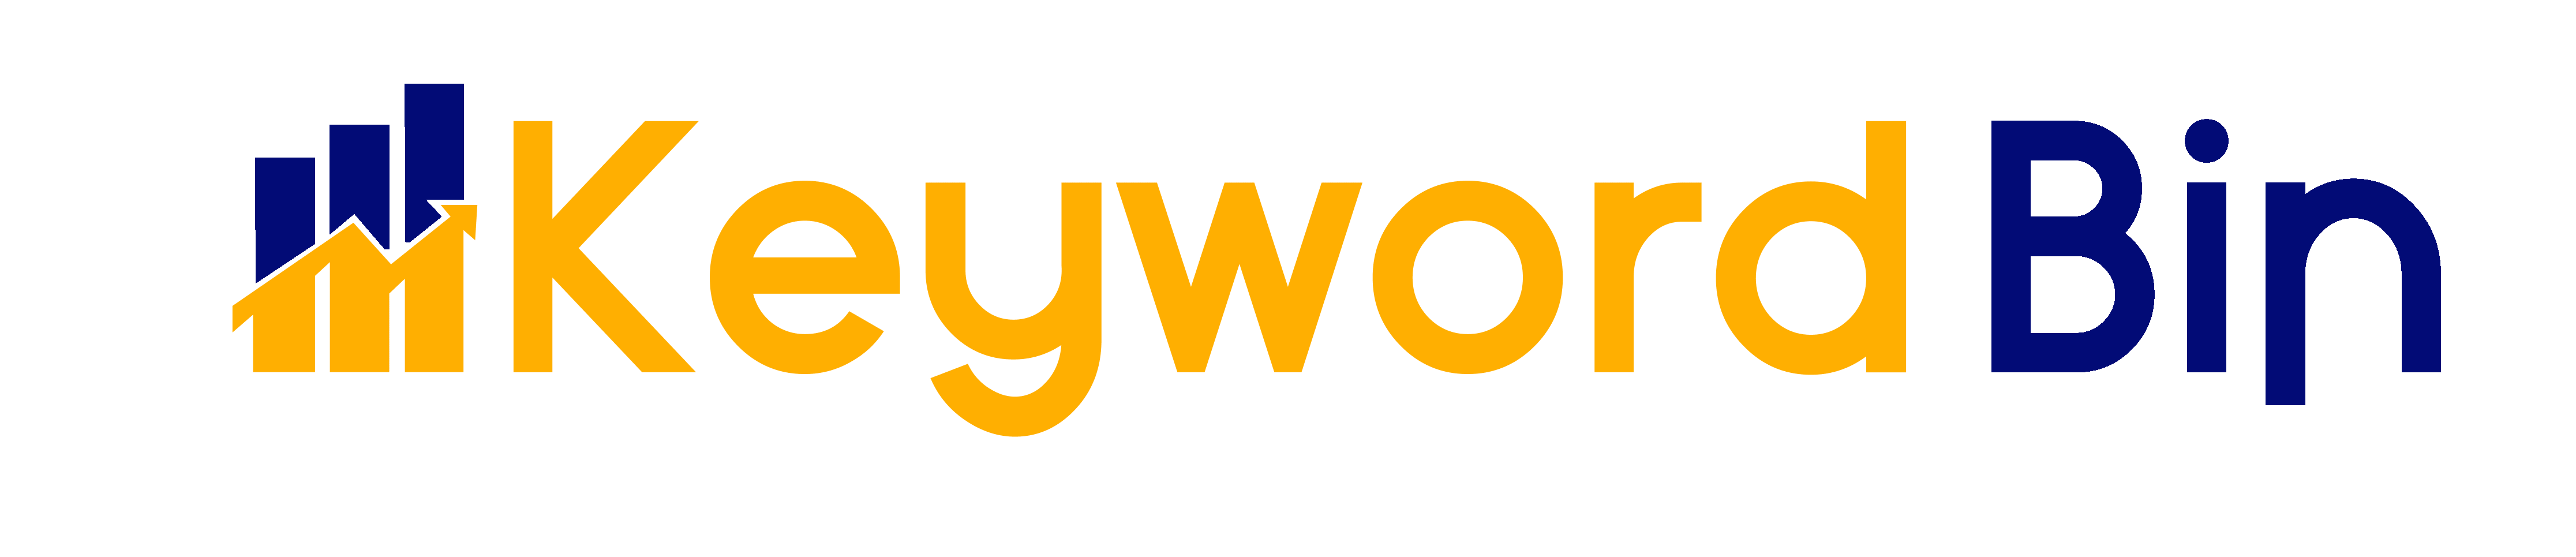 KeywordBin logo